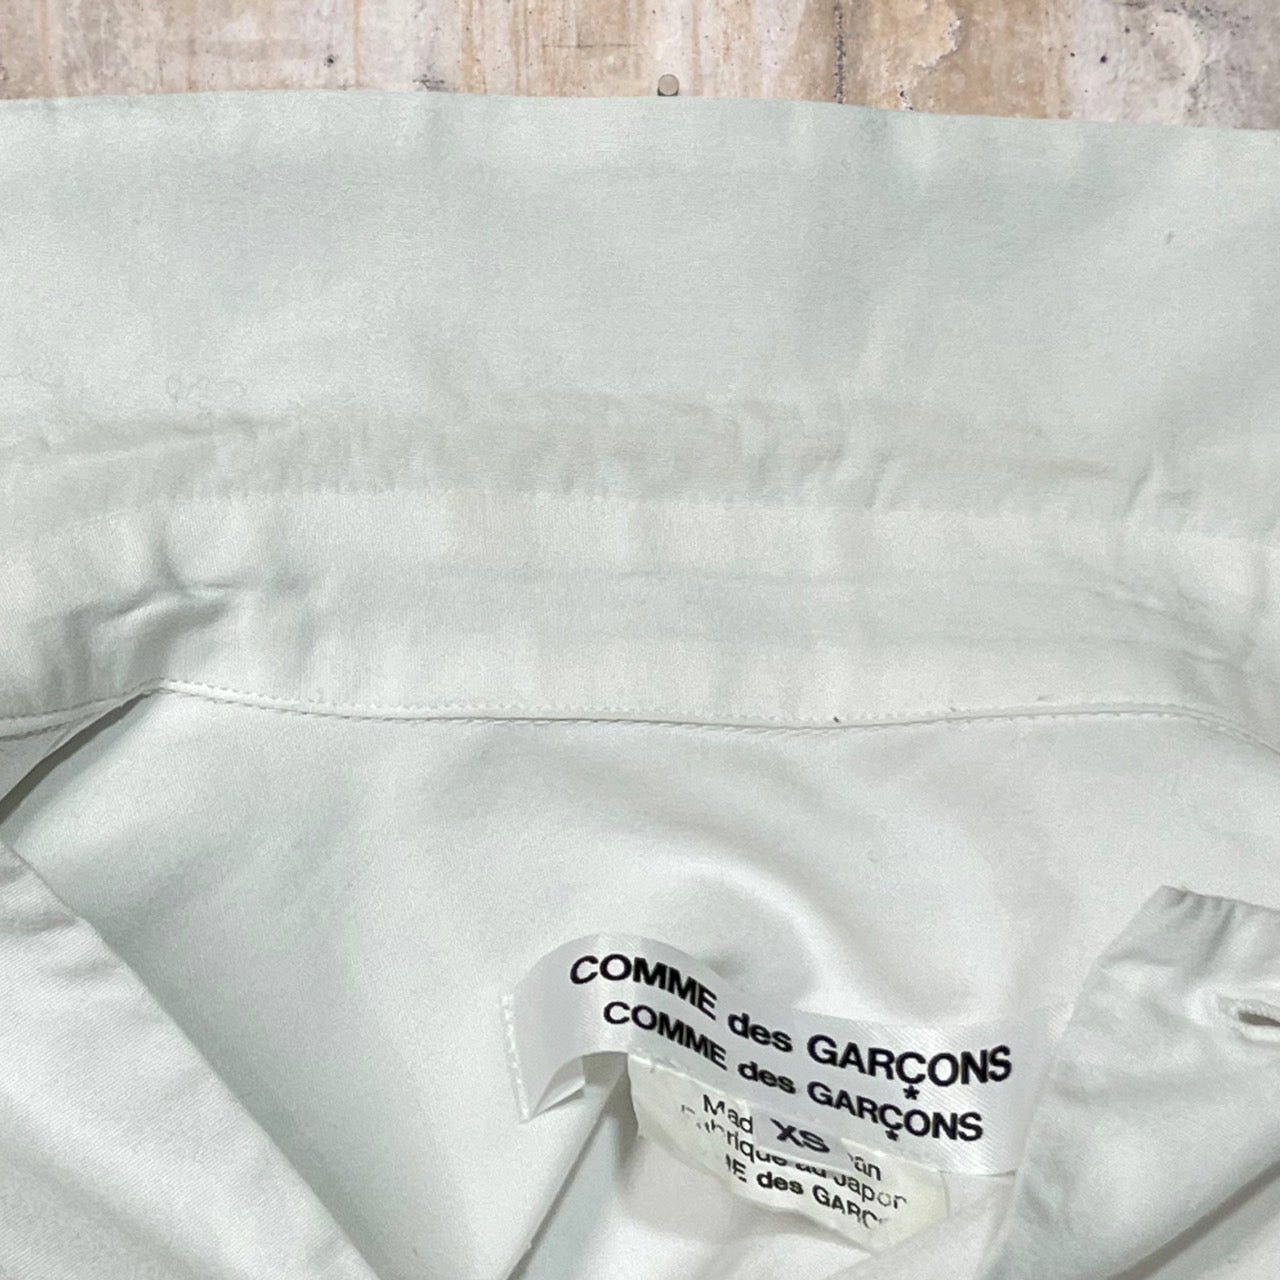 COMME des GARCONS COMME des GARCONS(コムデギャルソンコムデギャルソン) 17AW random ruffle shirt/ランダムフリル丸襟シャツ/ブラウス RT-B010 XS ホワイト